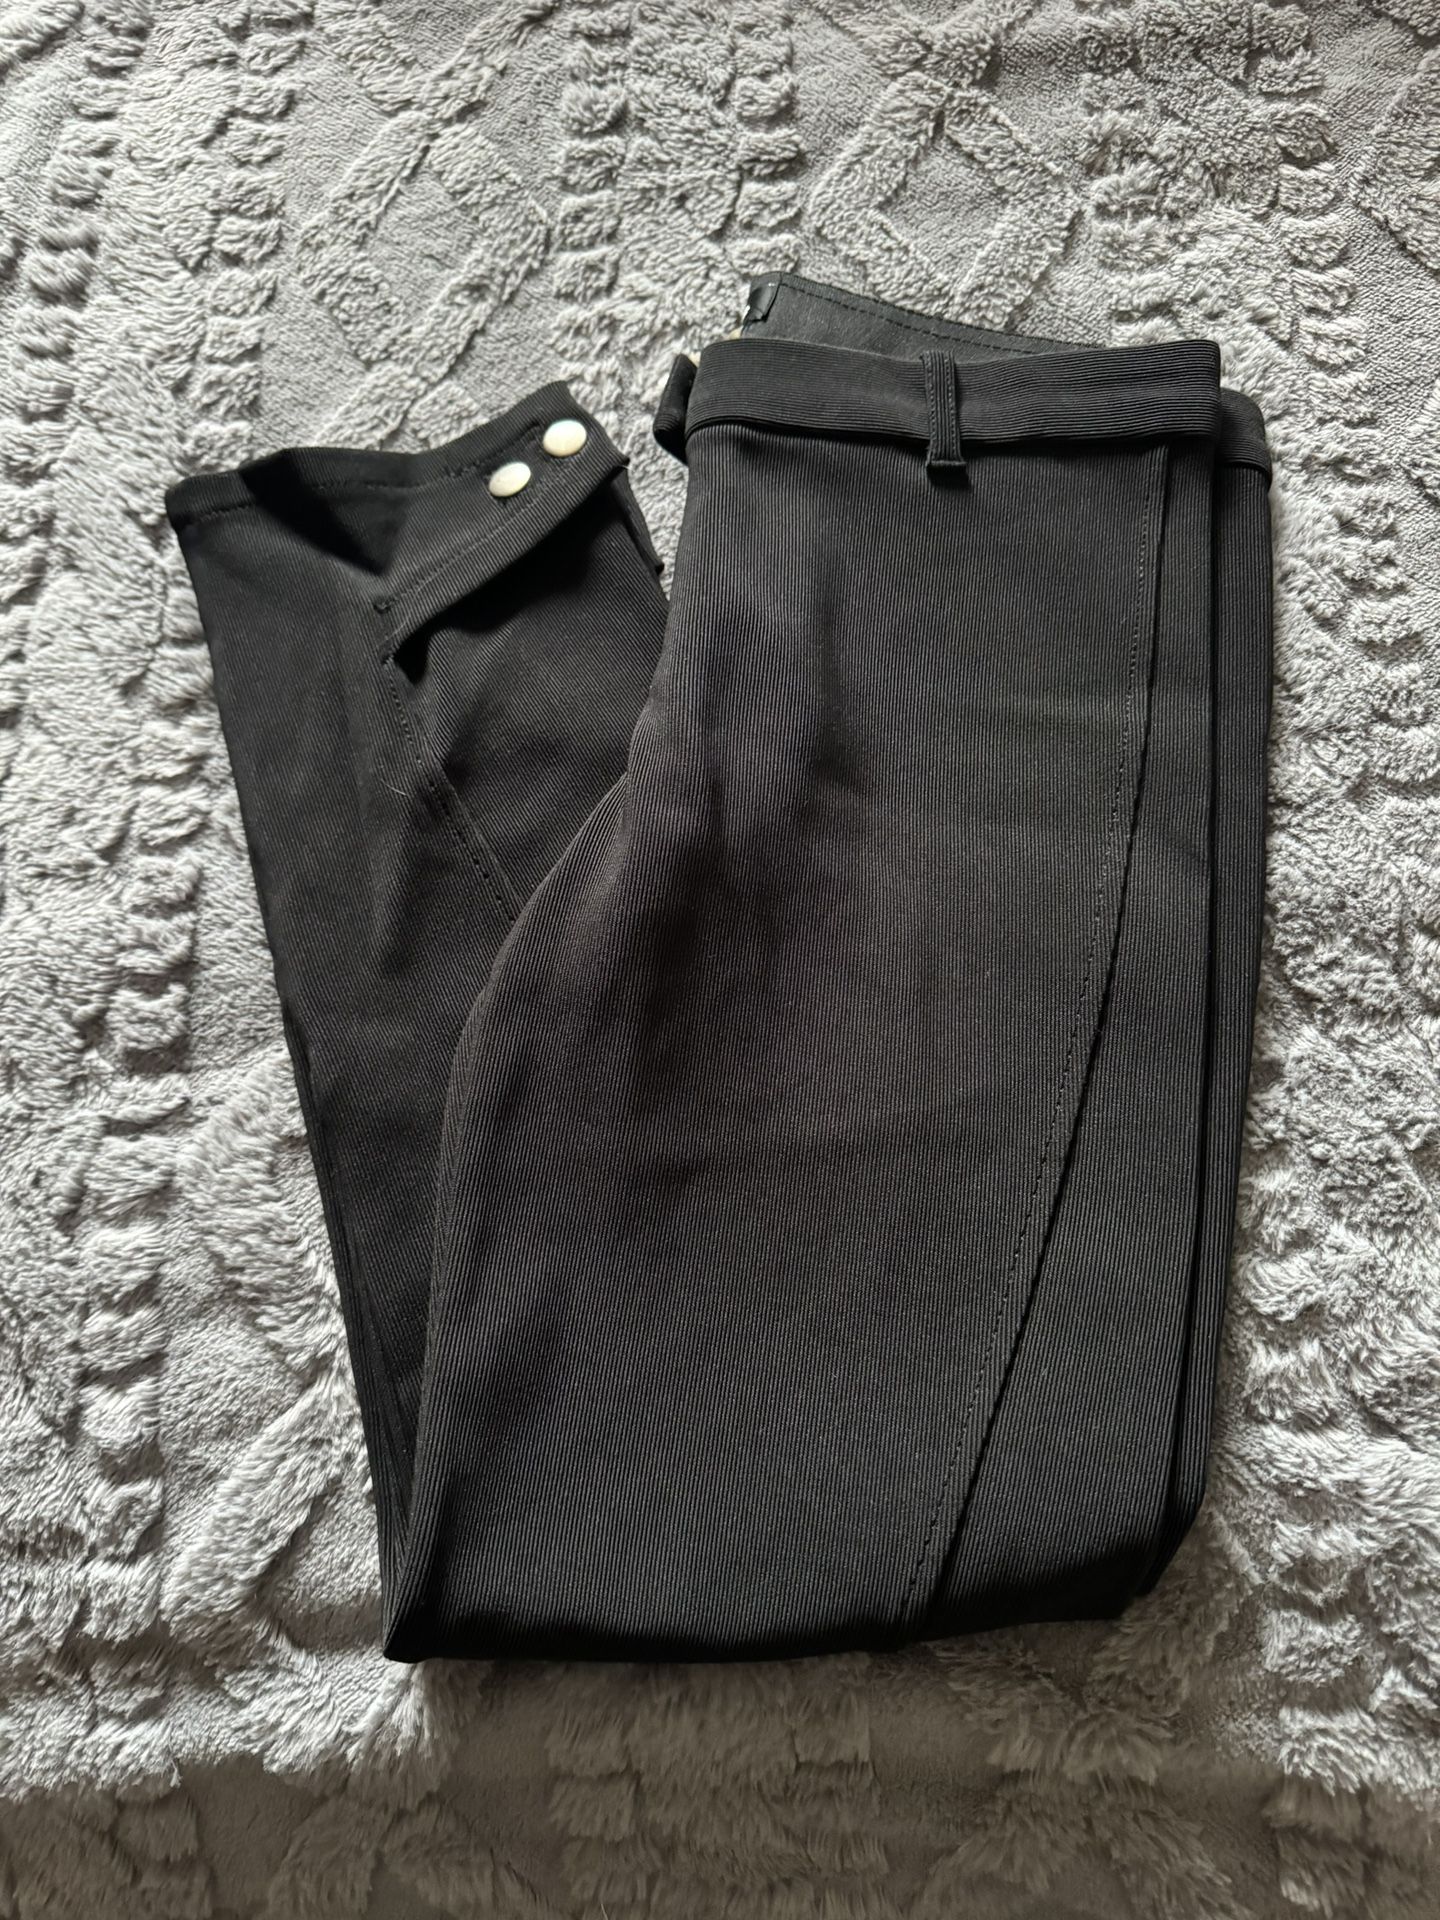 Bebe Black Dress Pants Classy Capri 